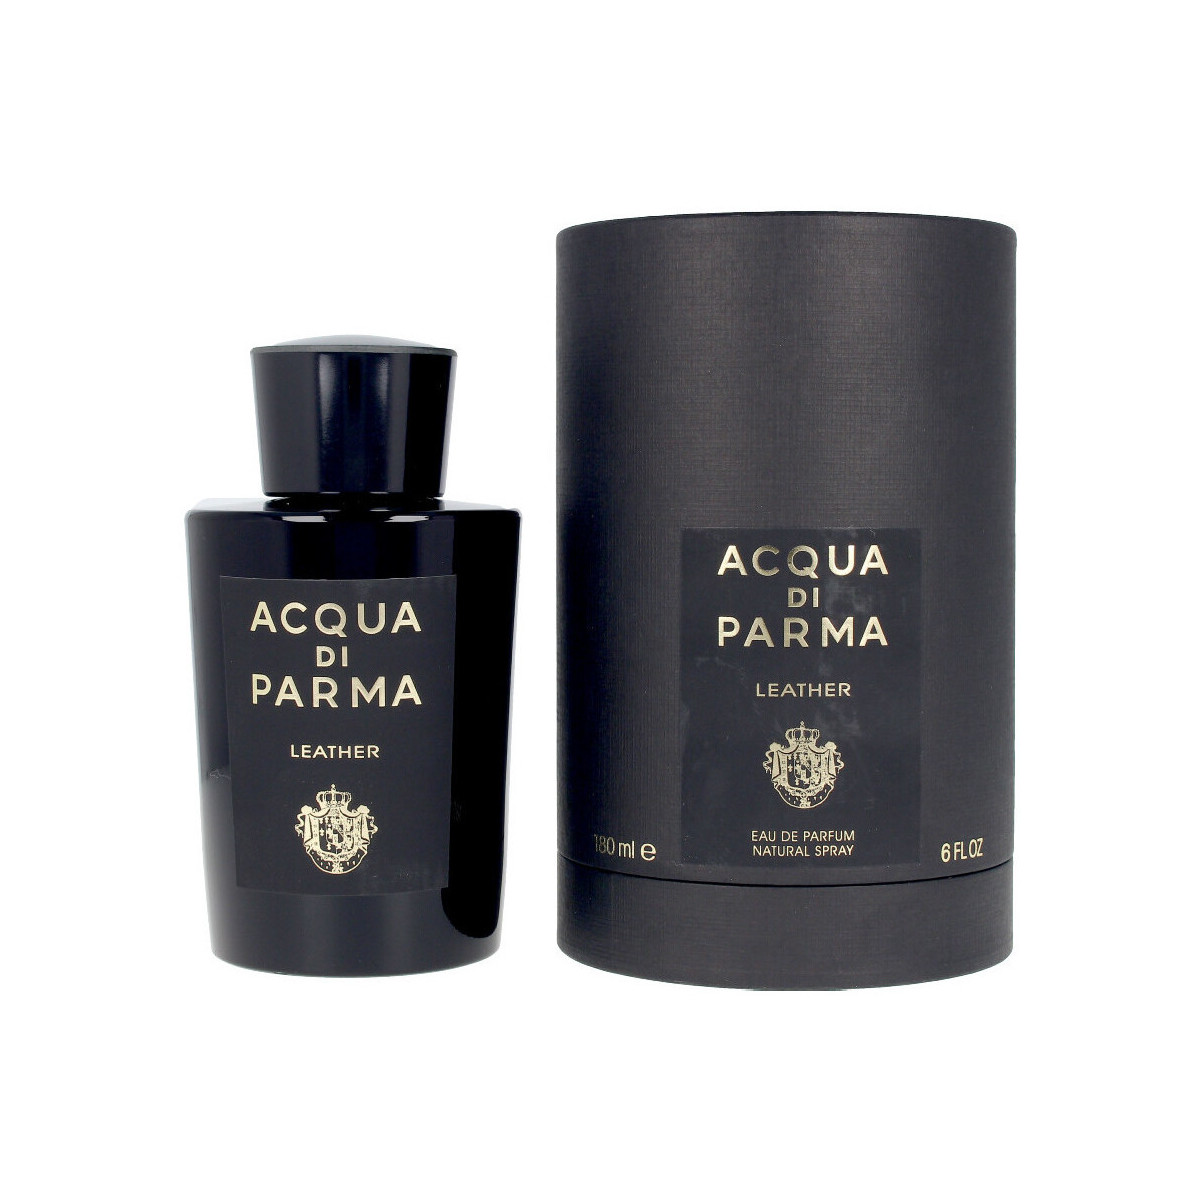 Belleza Perfume Acqua Di Parma Leather - Eau de Parfum - 180ml - Vaporizador Leather - perfume - 180ml - spray